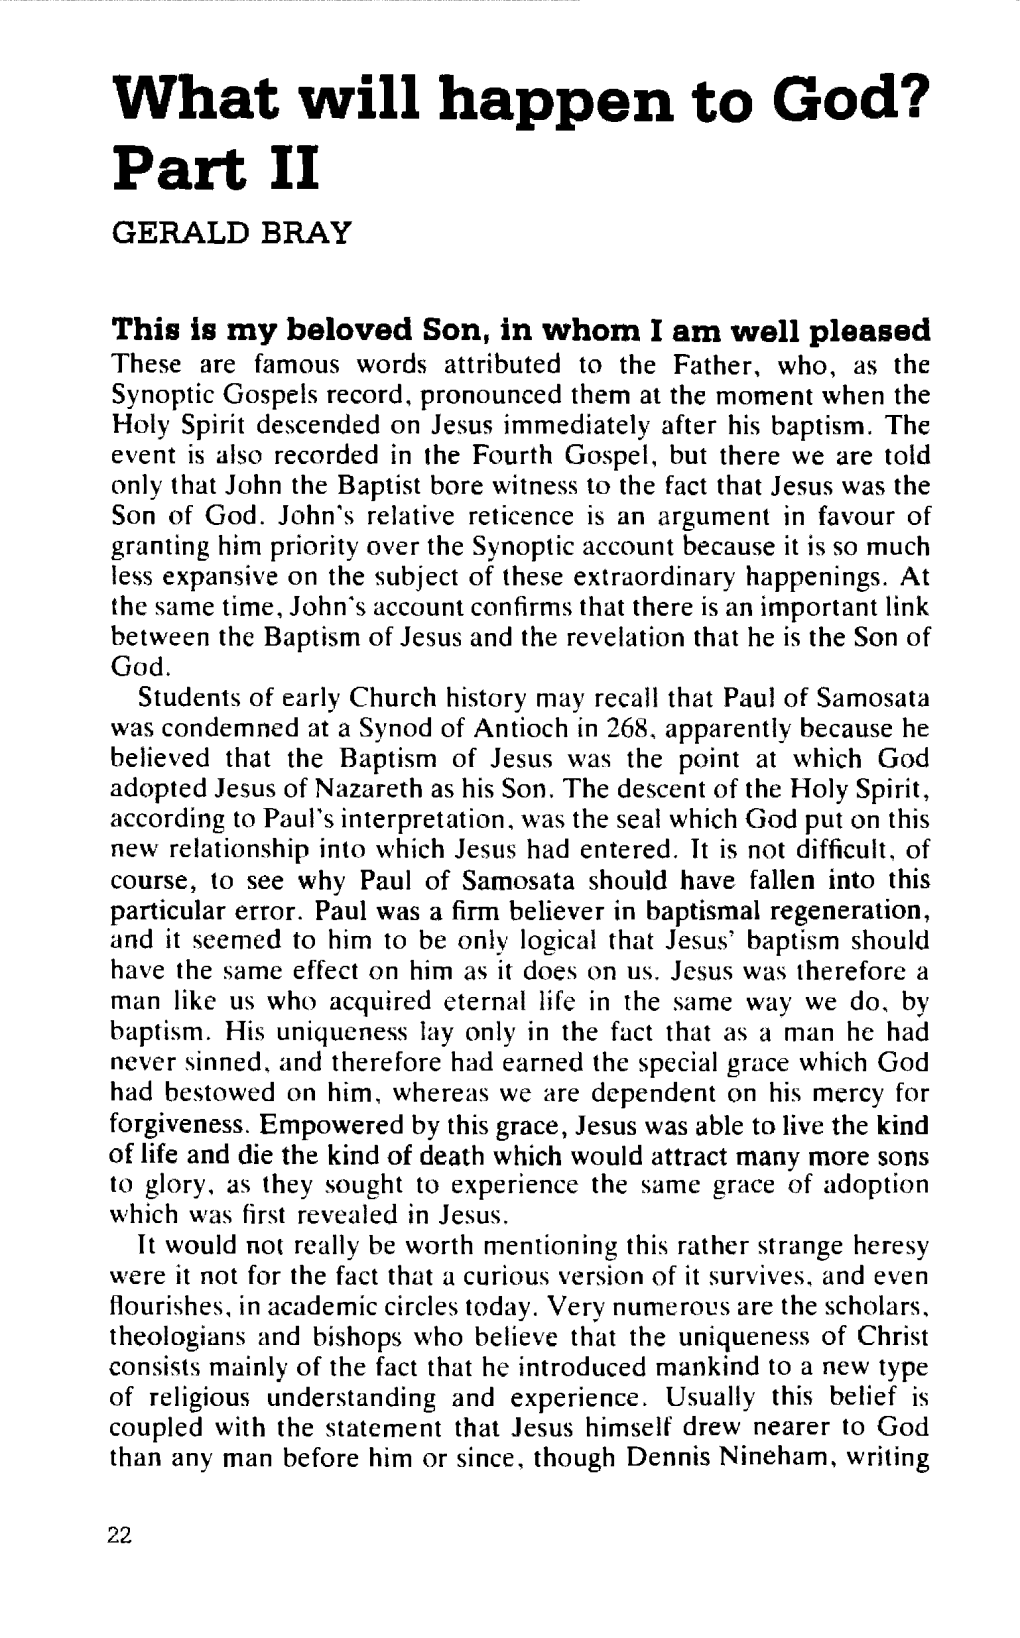 Gerald Bray, "What Will Happen to God? {Part II)," Churchman 101.1